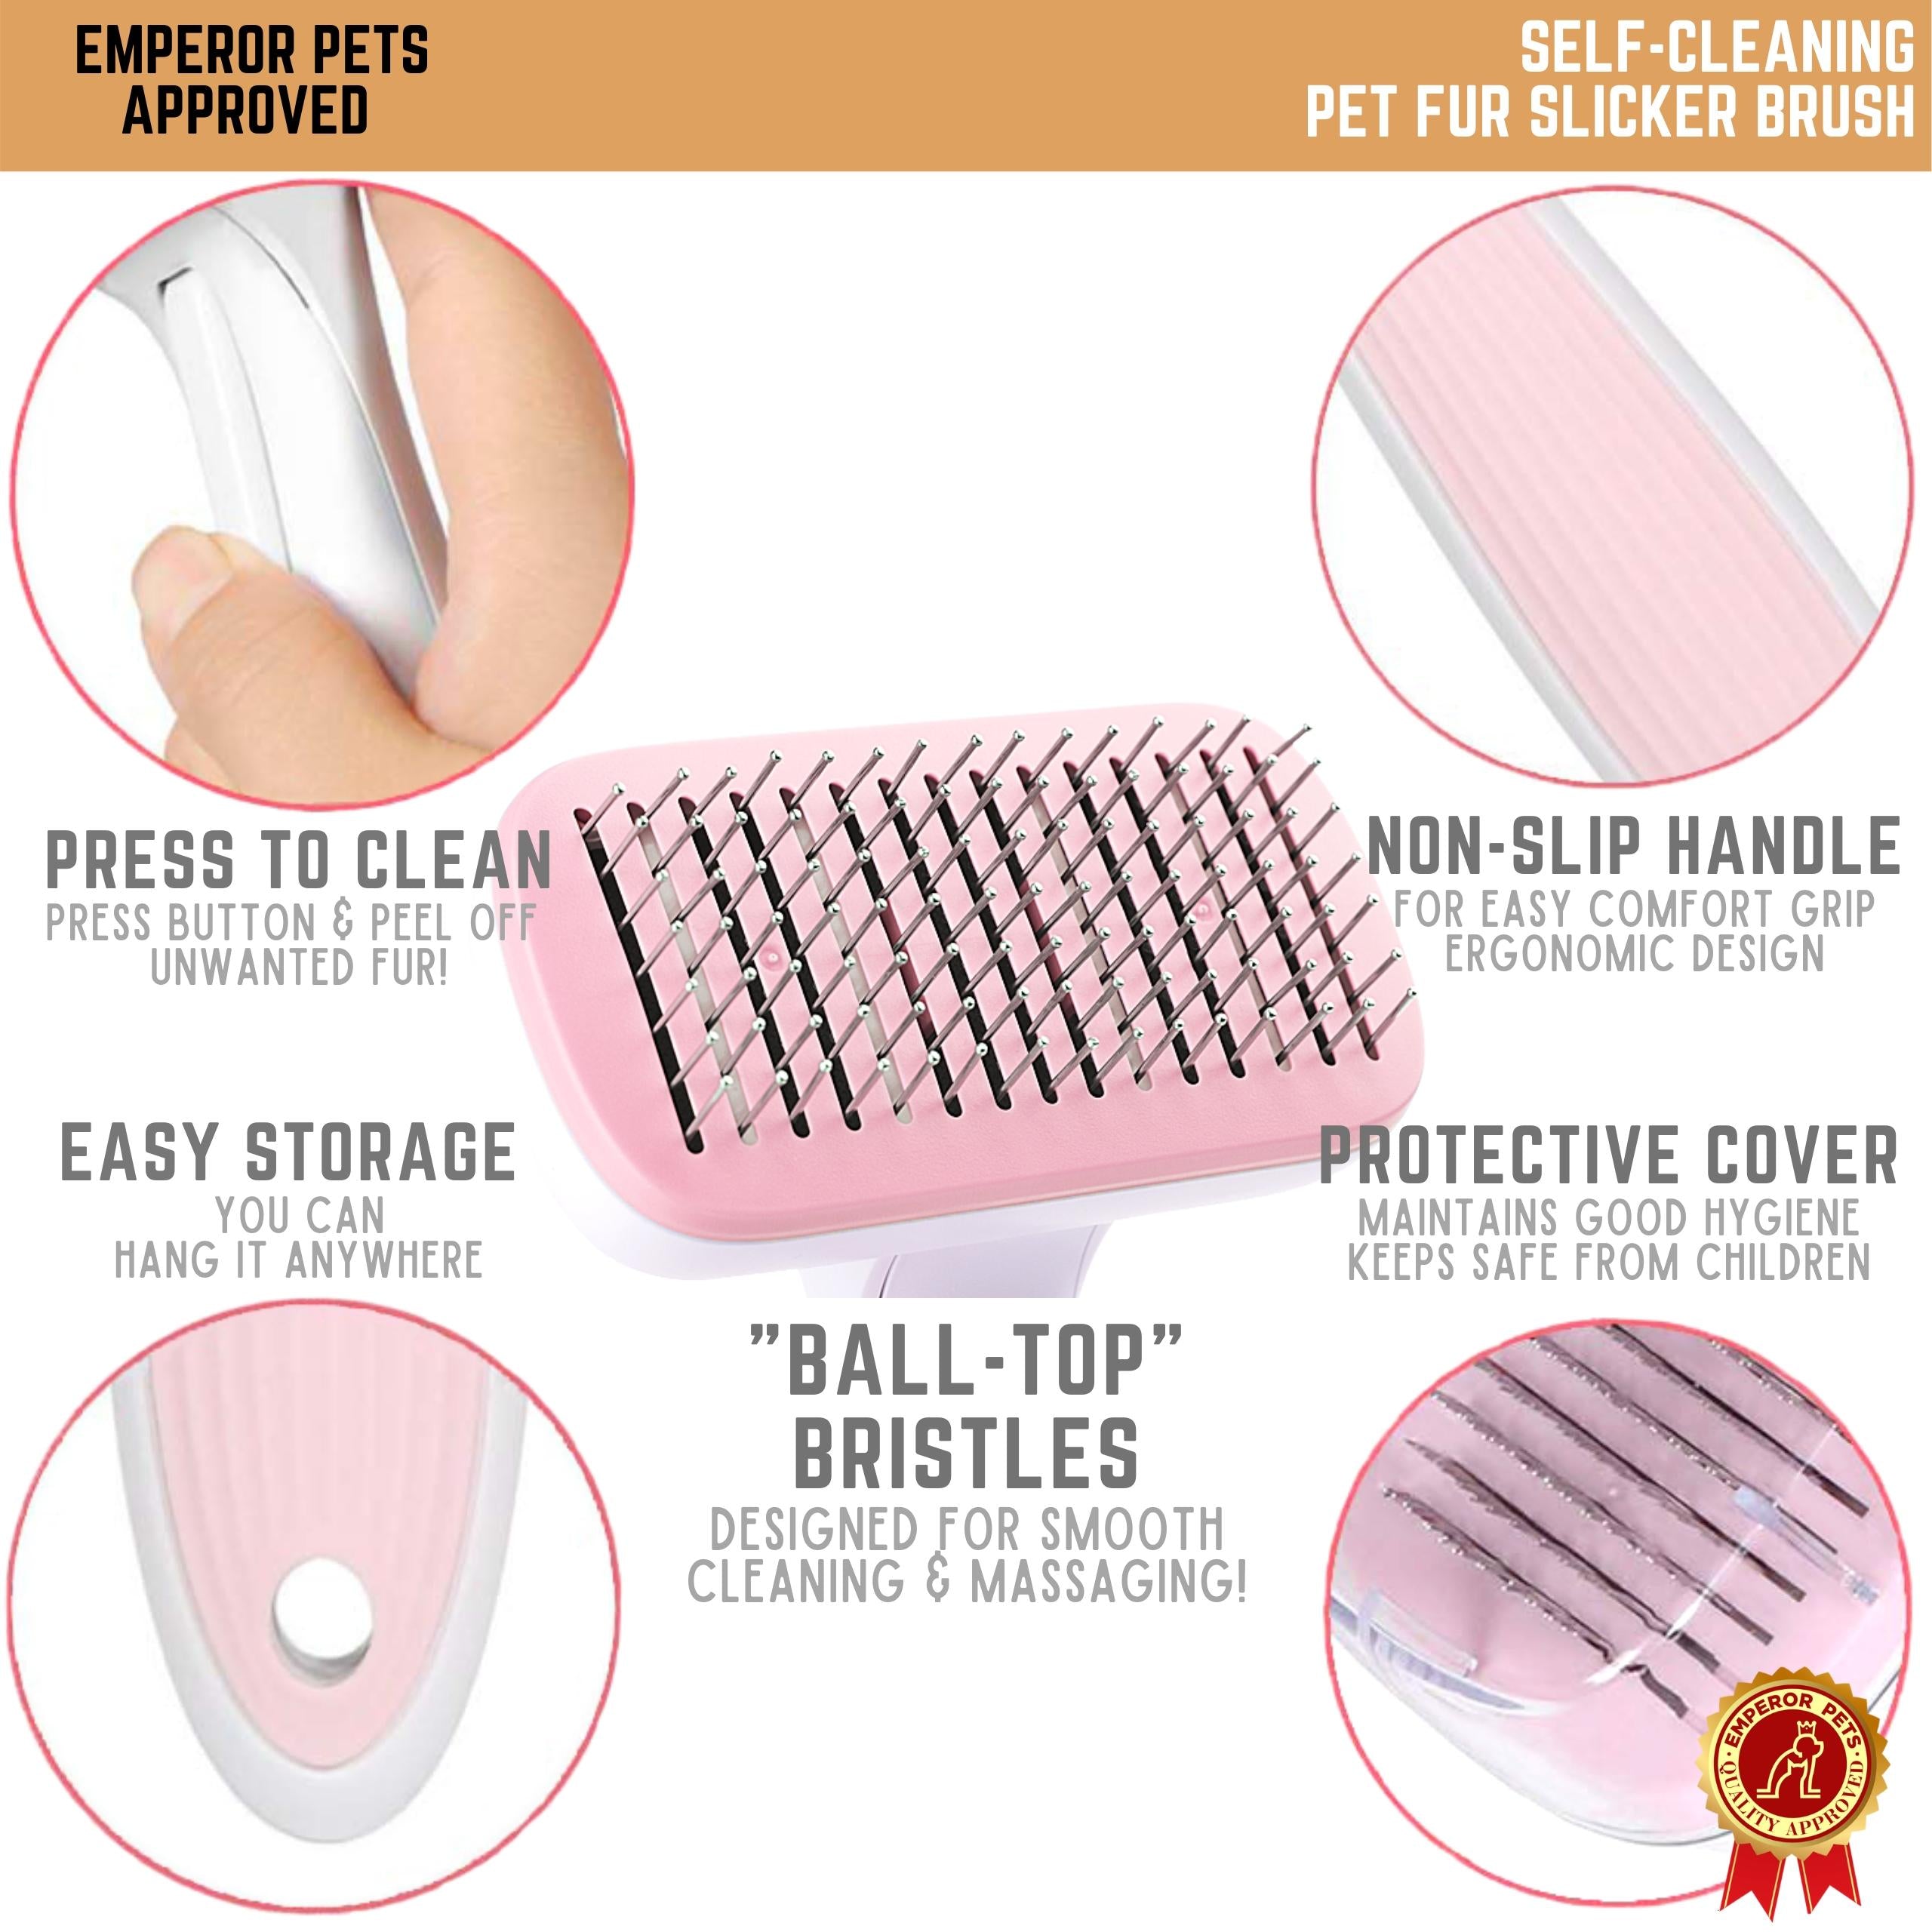 Emperor Pets Self Cleaning Pet Fur Slicker Brush for Short Fur Pets, Dog Brush, Cat Brush, Pink Color - Image 3 Key Features